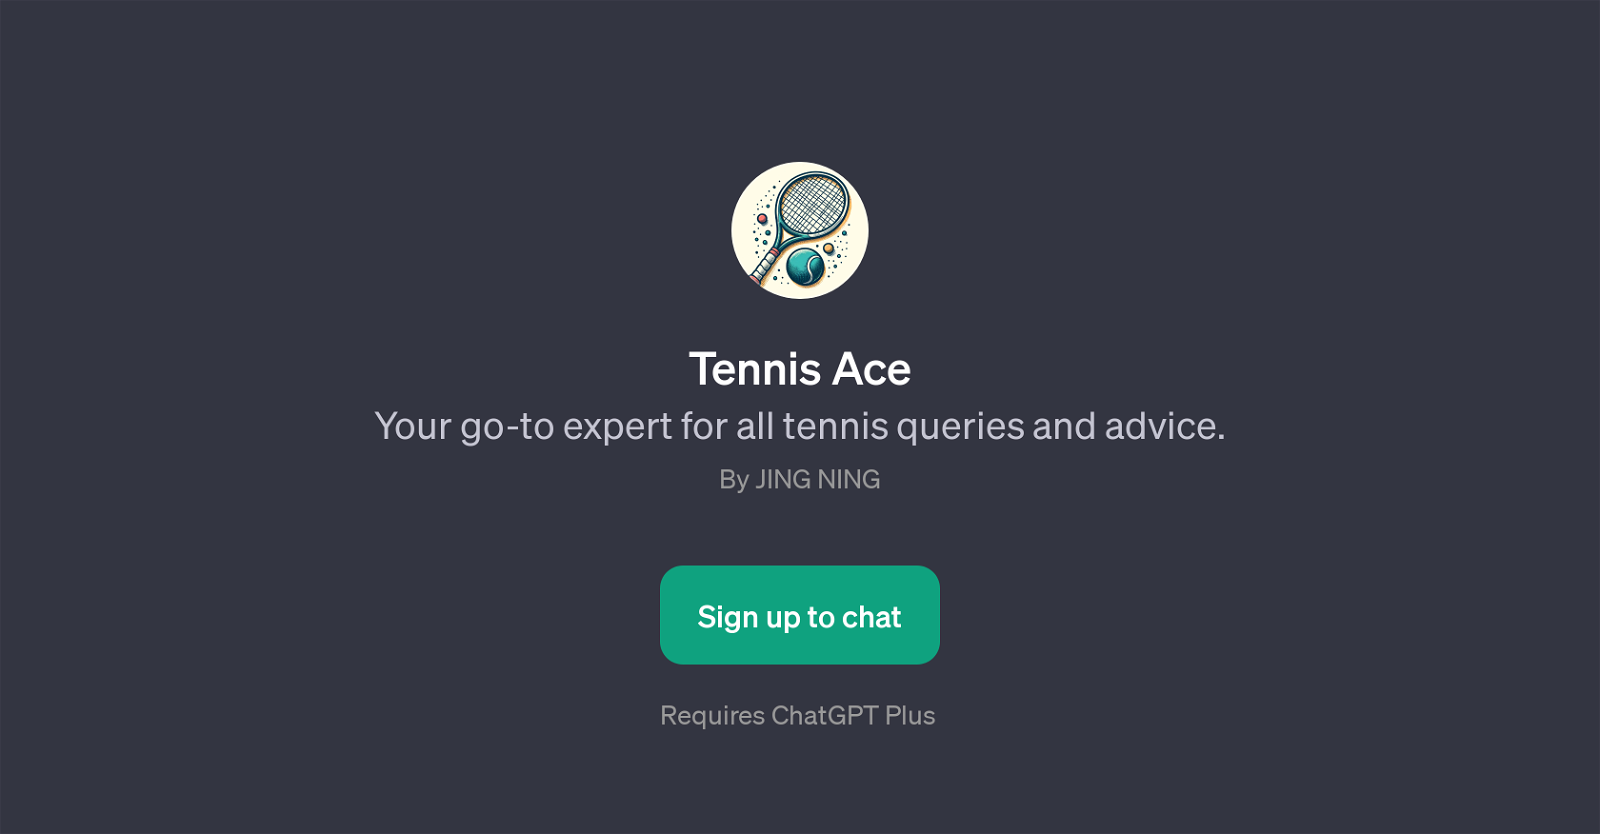 Tennis Ace website